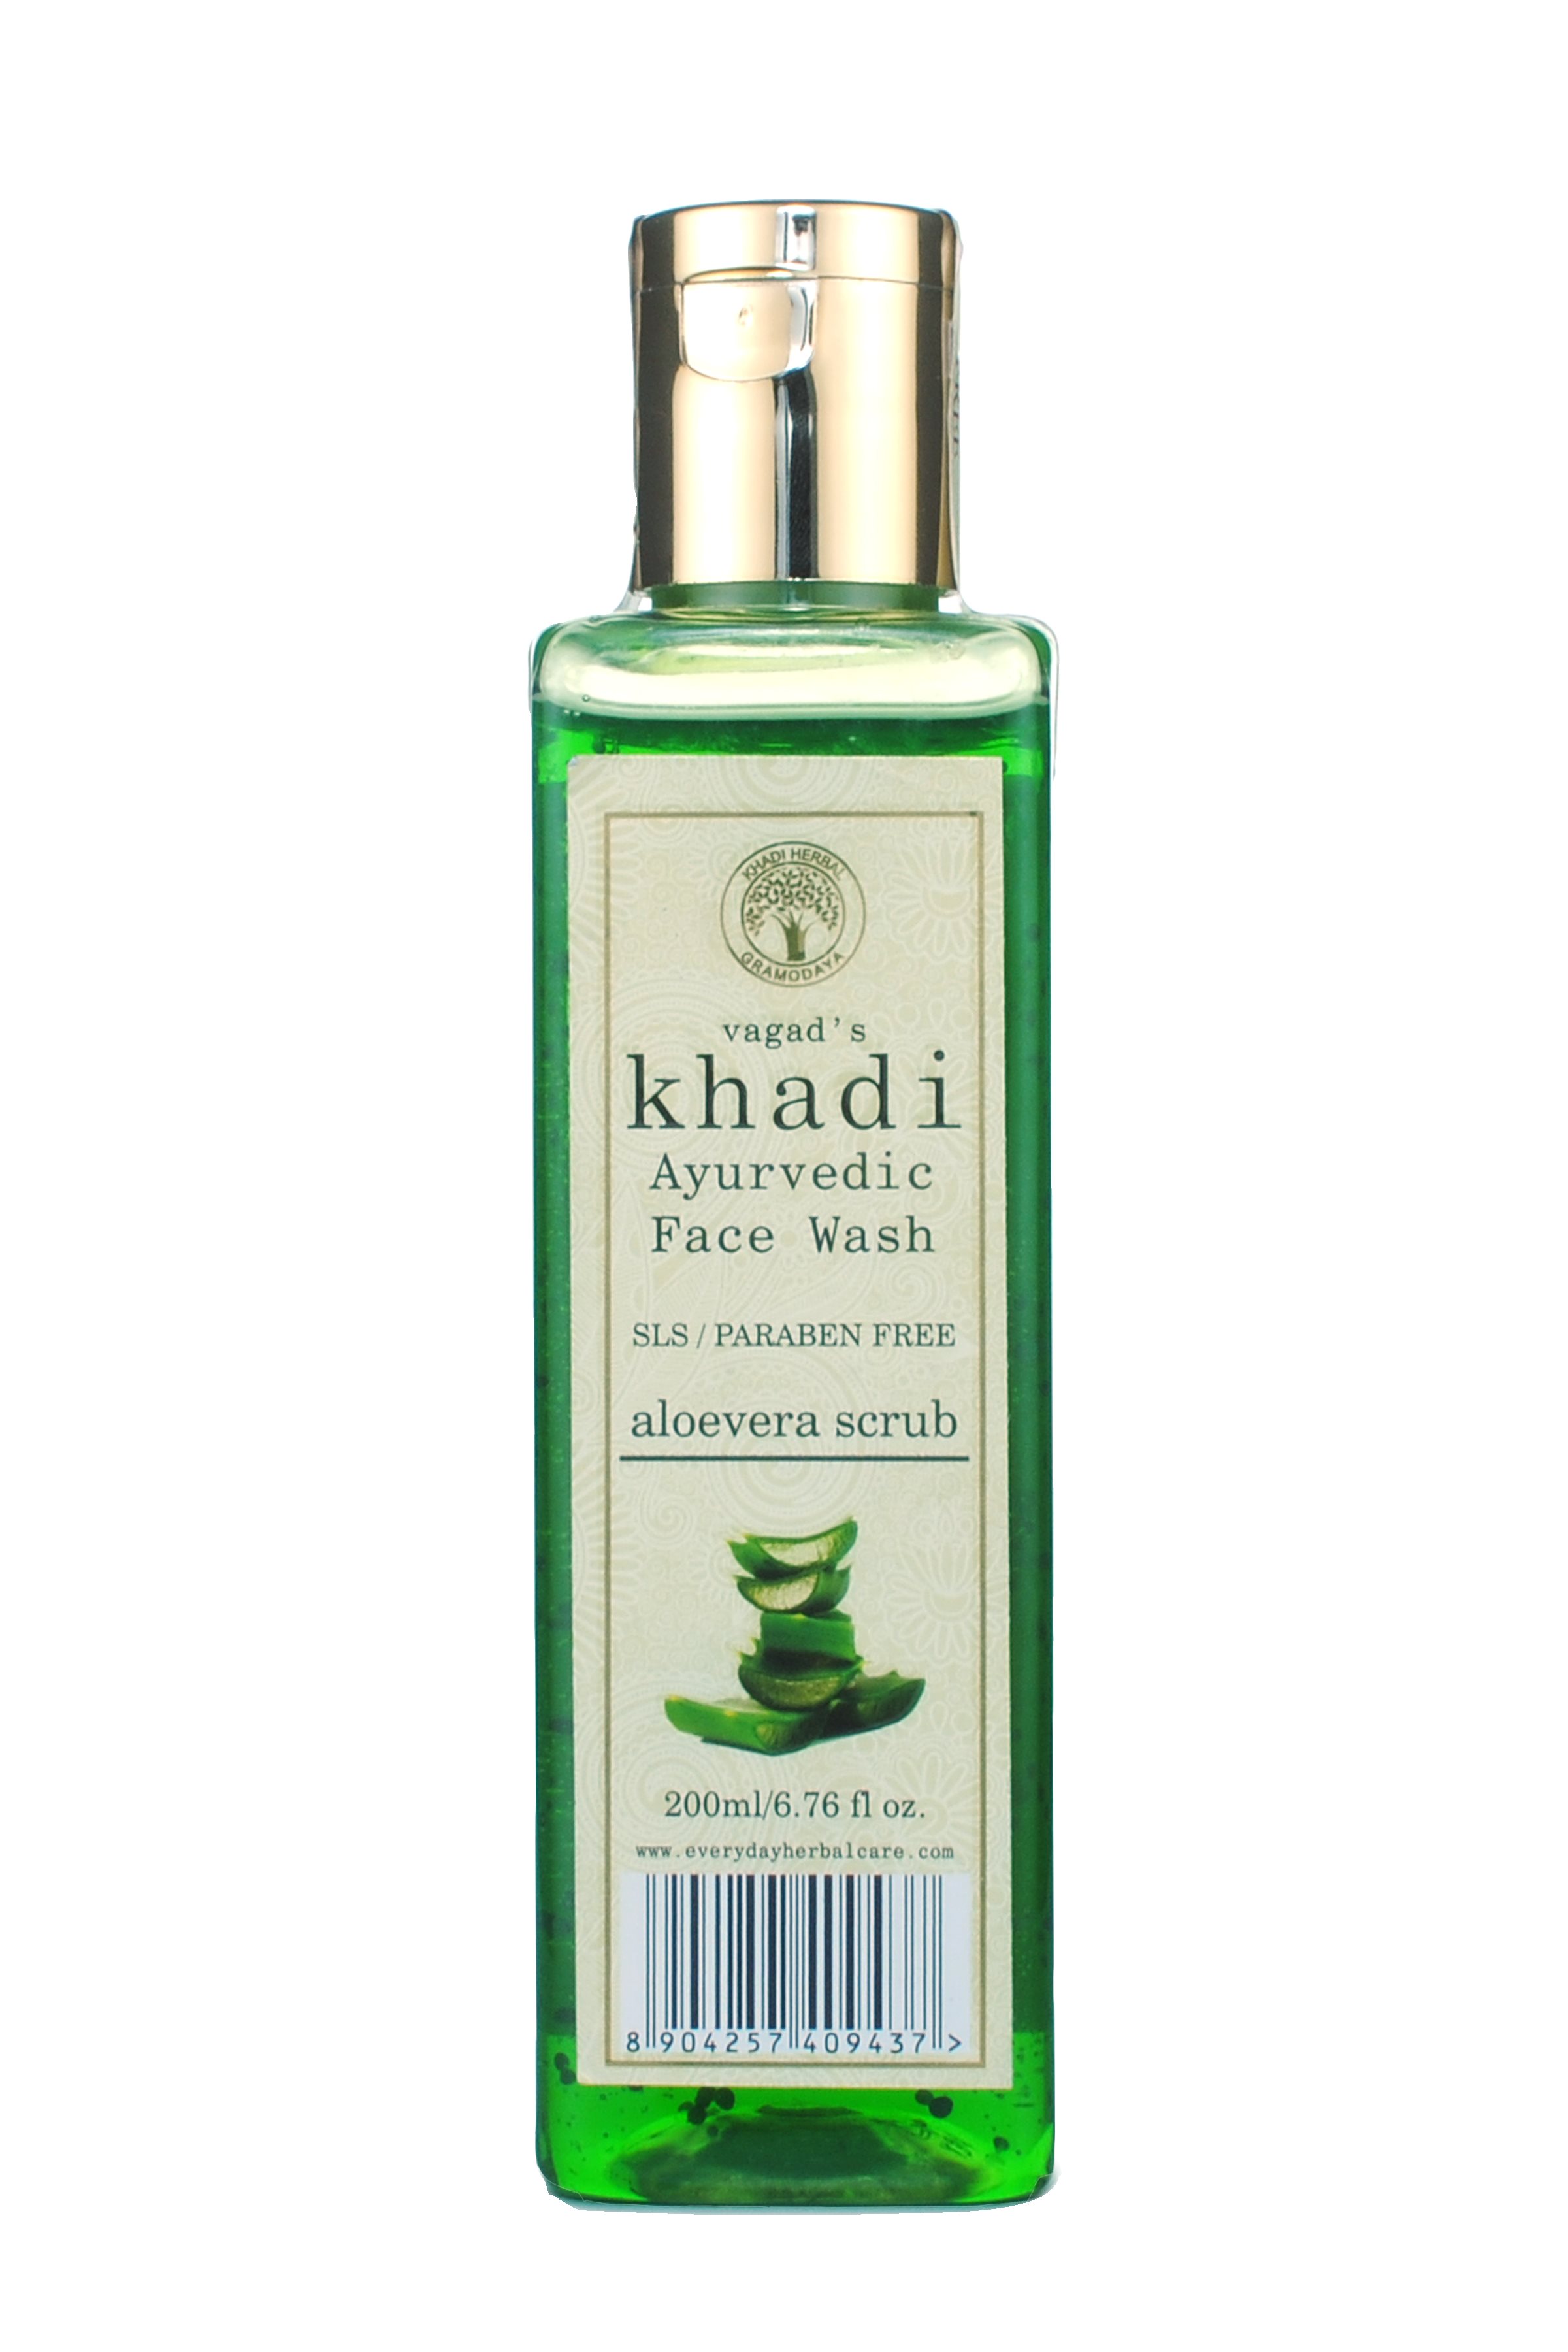 Buy Vagad's Khadi S.L.S And Paraben Free Aloevera Scrub Face Wash at Best Price Online